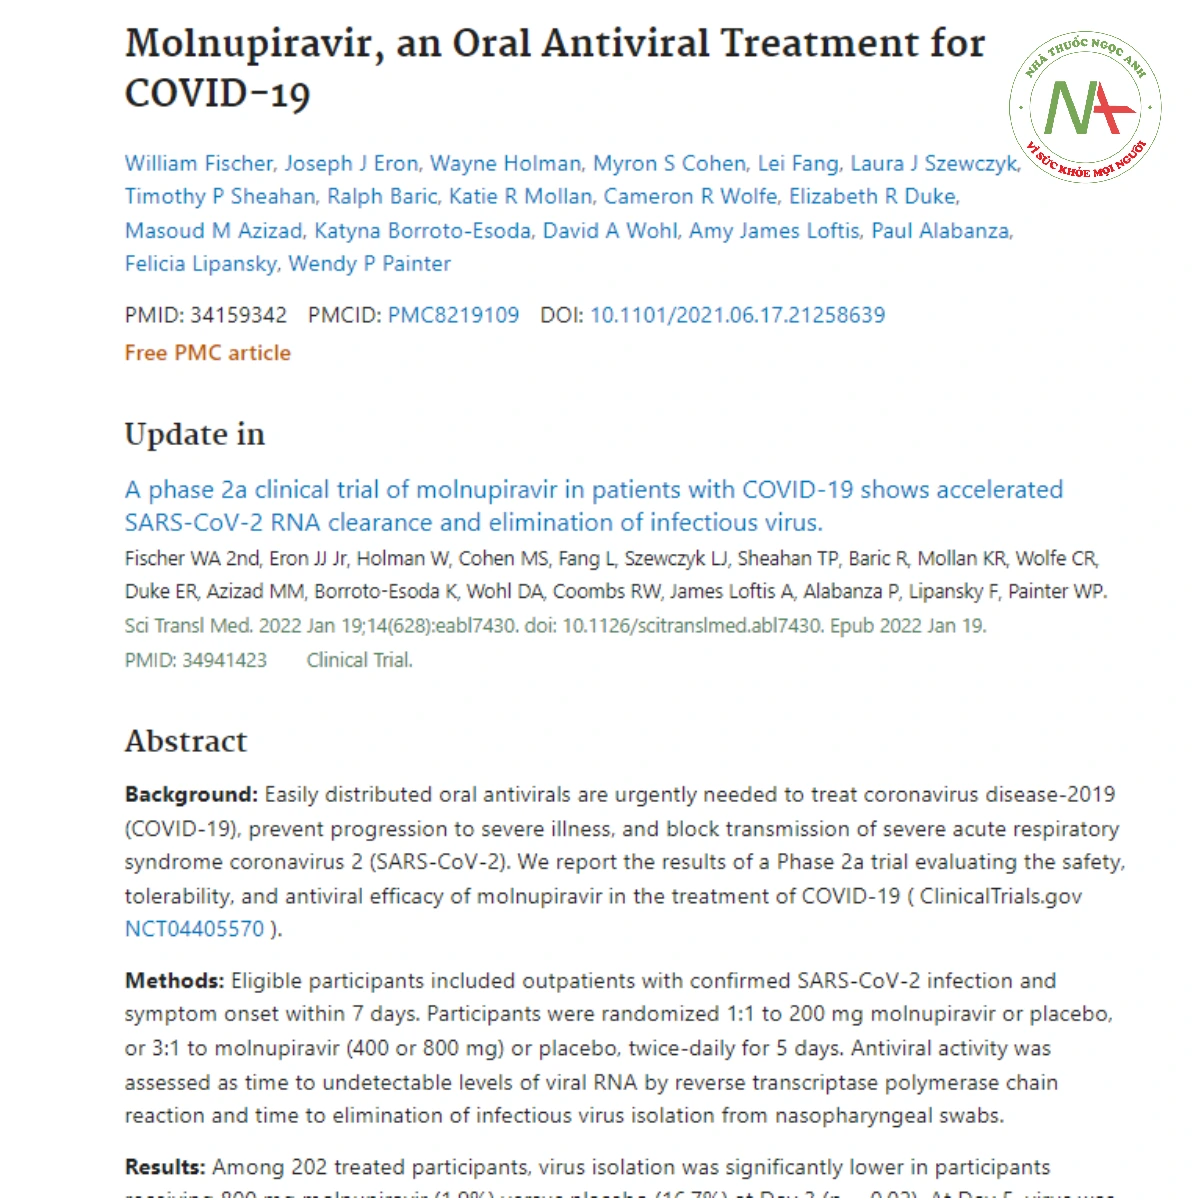 Molnupiravir, an Oral Antiviral Treatment for COVID-19